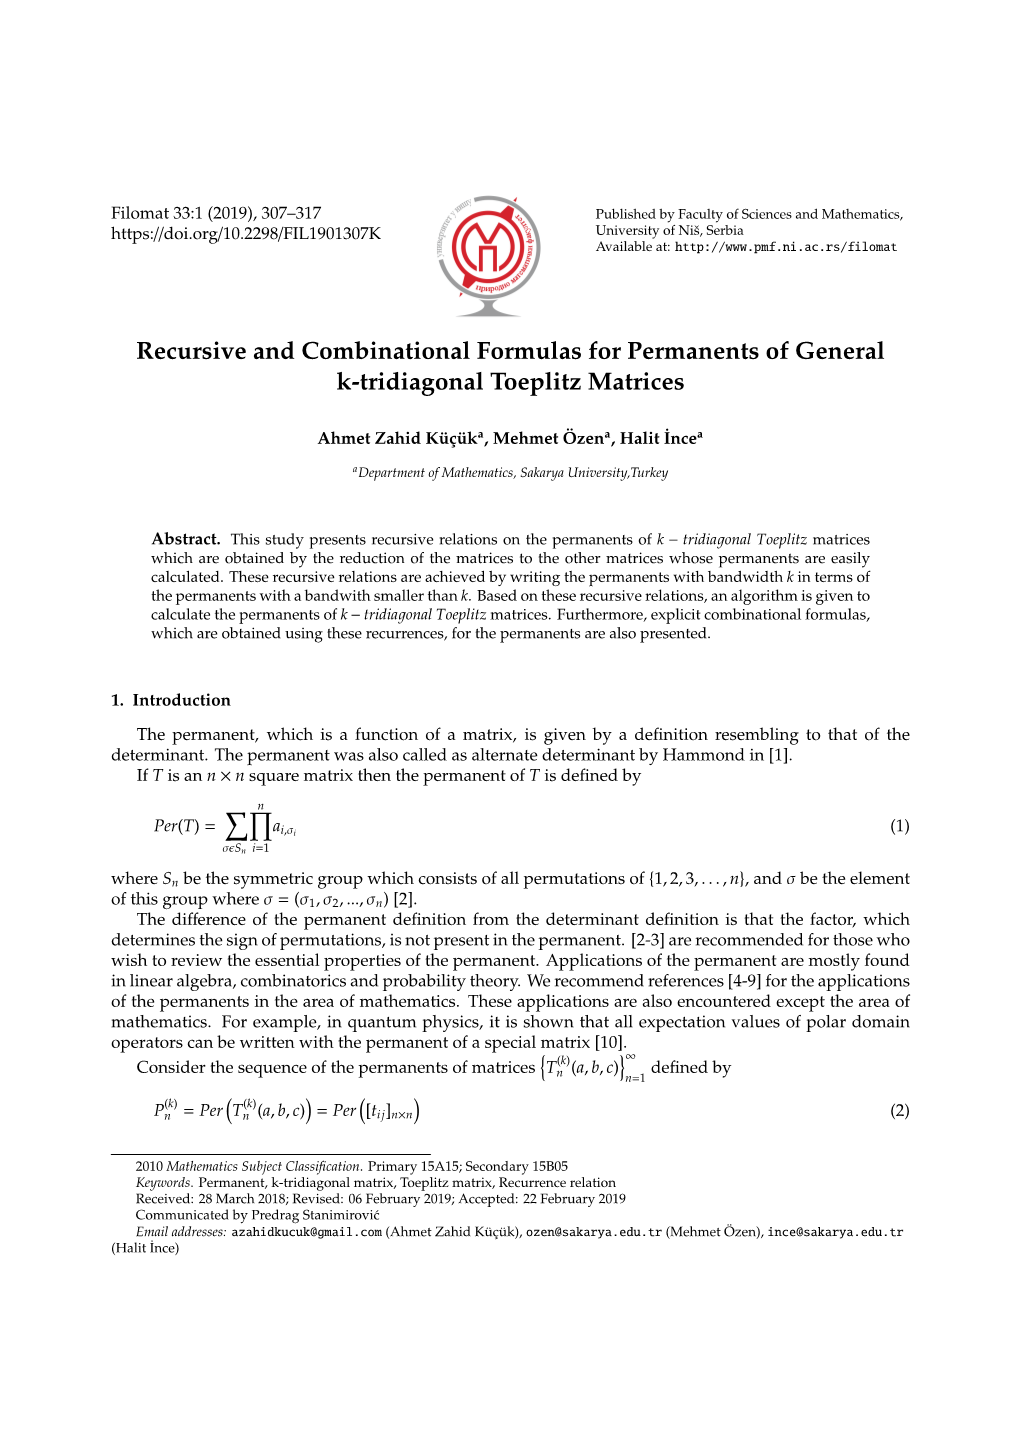 Recursive and Combinational Formulas for Permanents of General K-Tridiagonal Toeplitz Matrices